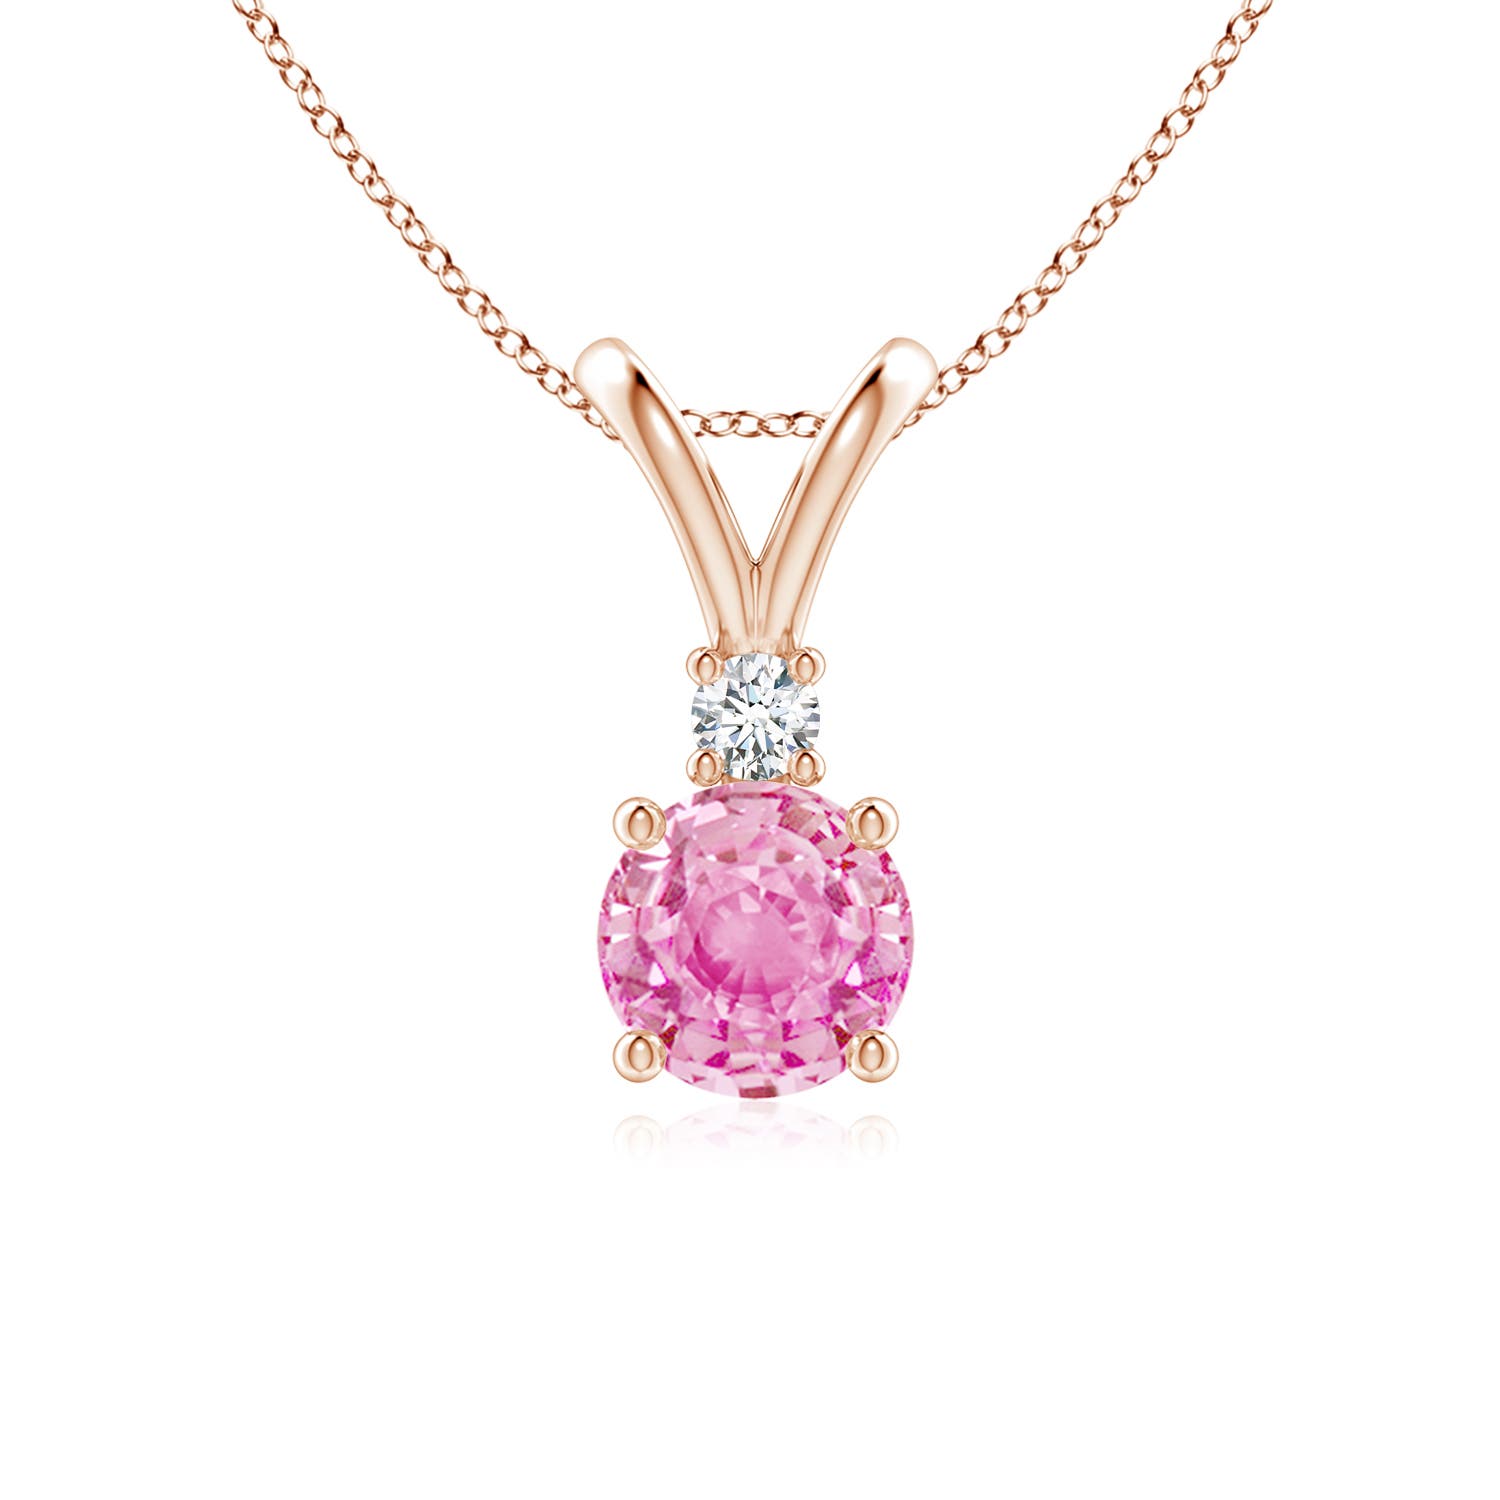 A - Pink Sapphire / 1.04 CT / 14 KT Rose Gold